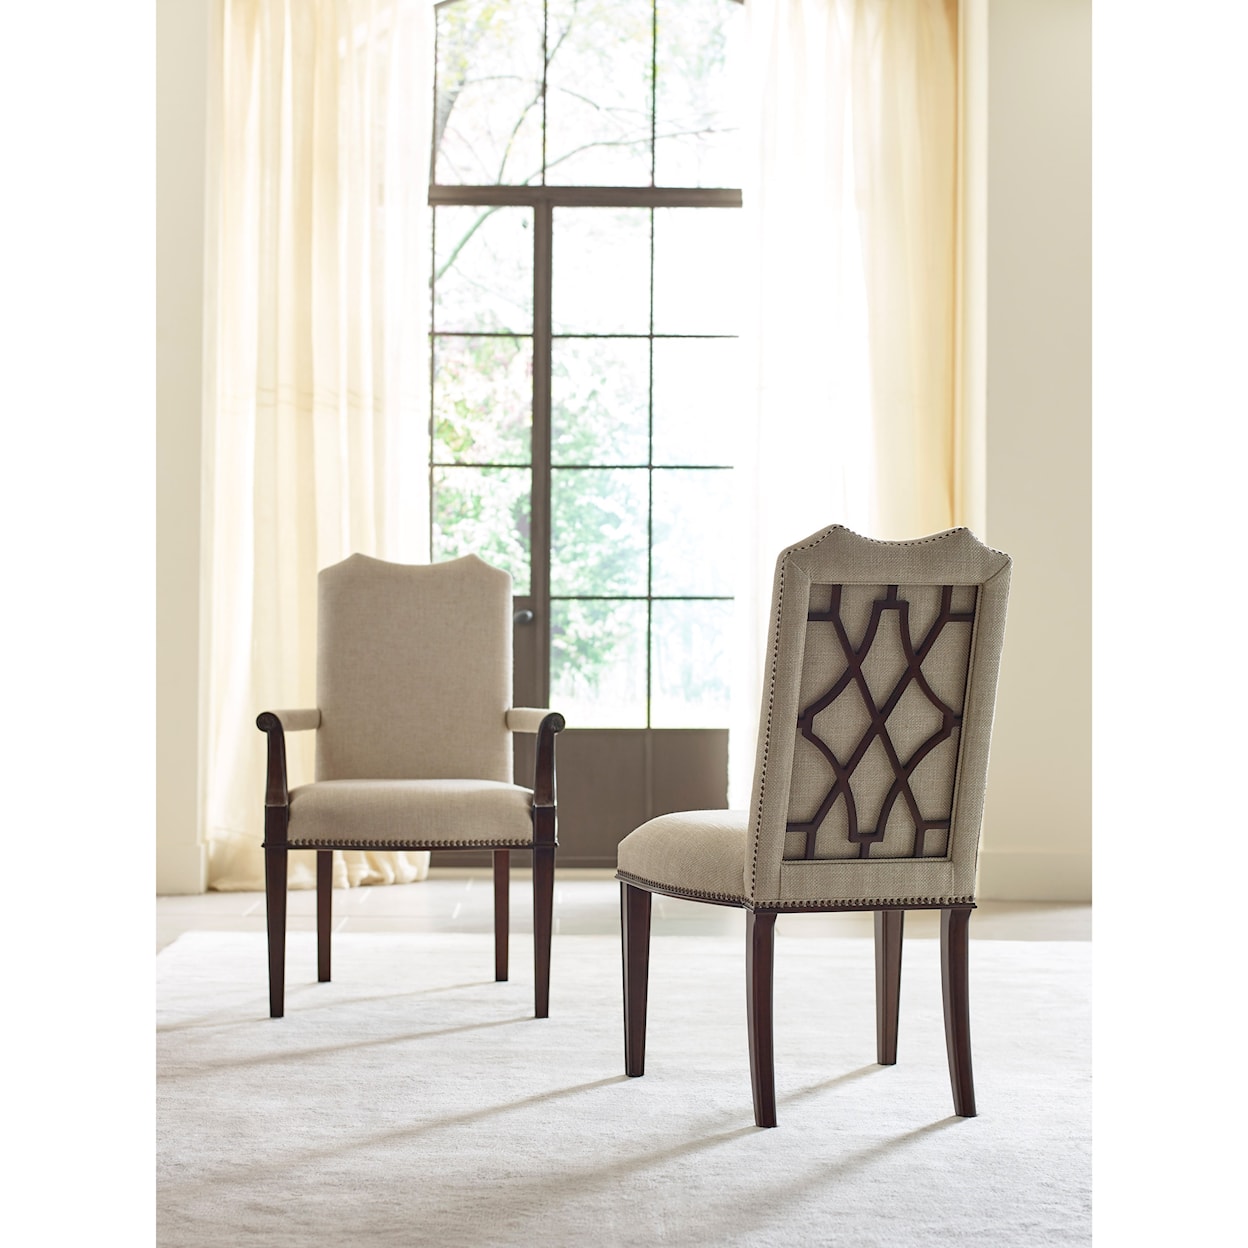 Kincaid Furniture Hadleigh Upholstered Side Chair